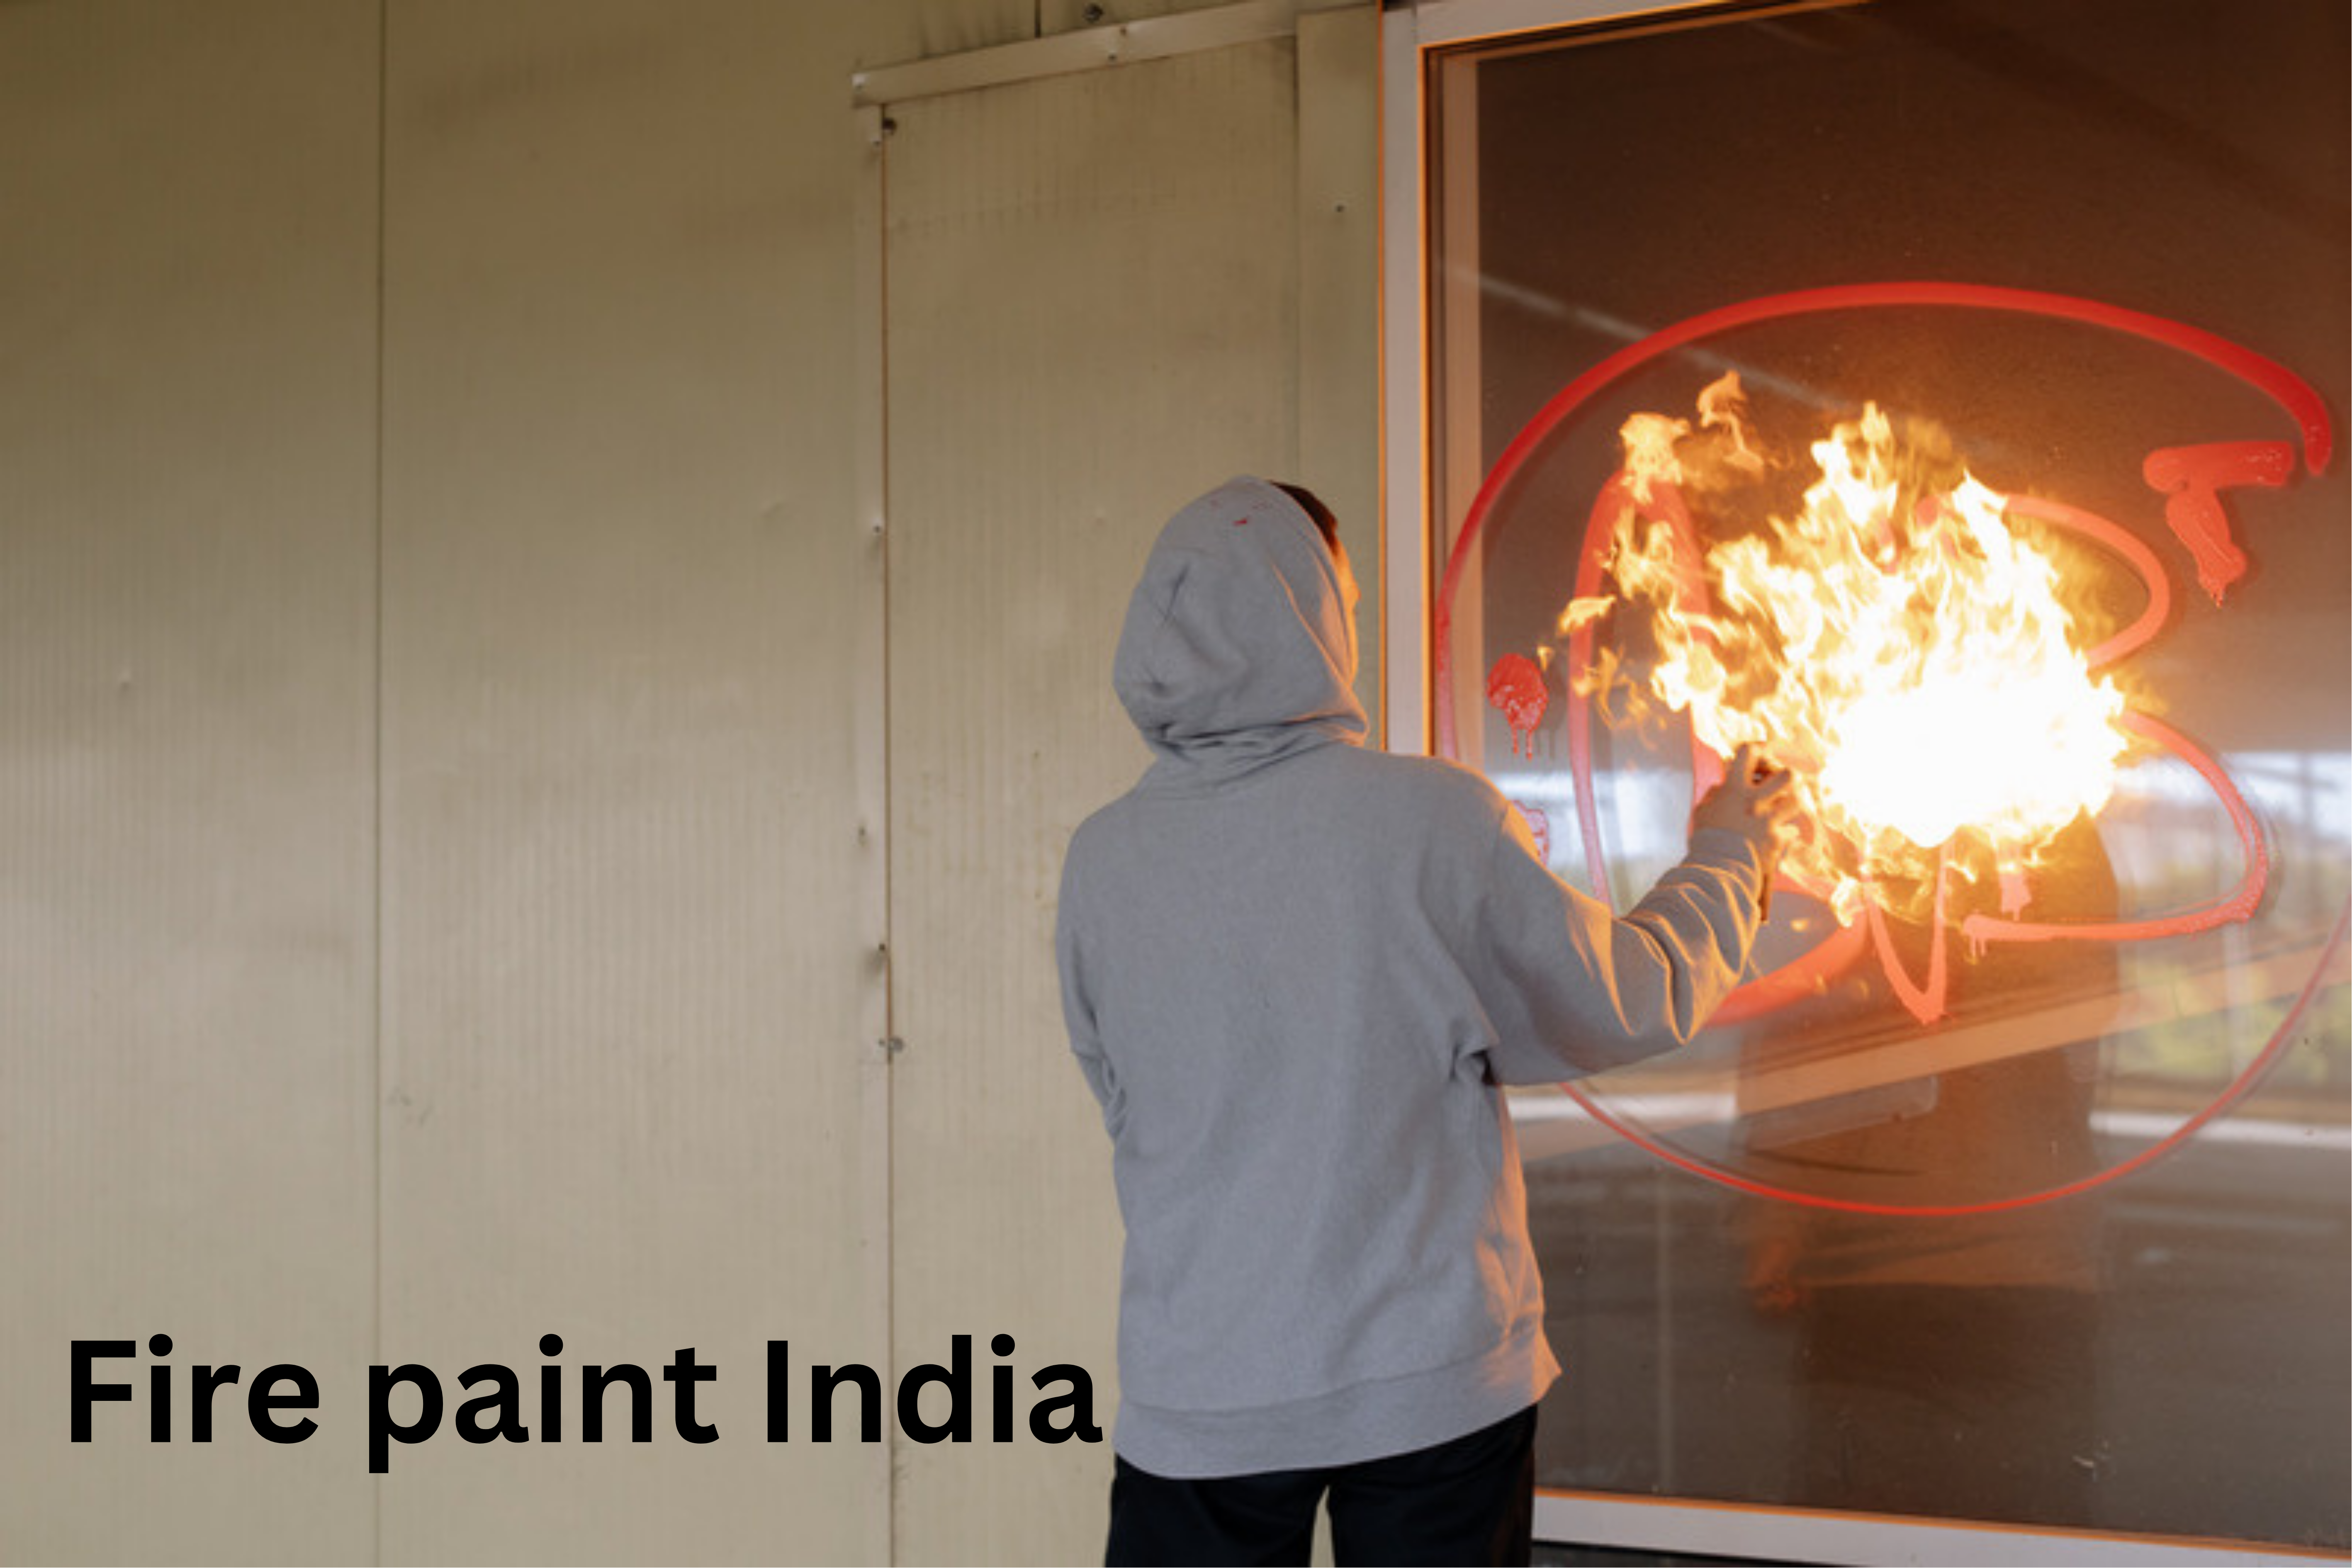 Fire paint India May - Gifyu